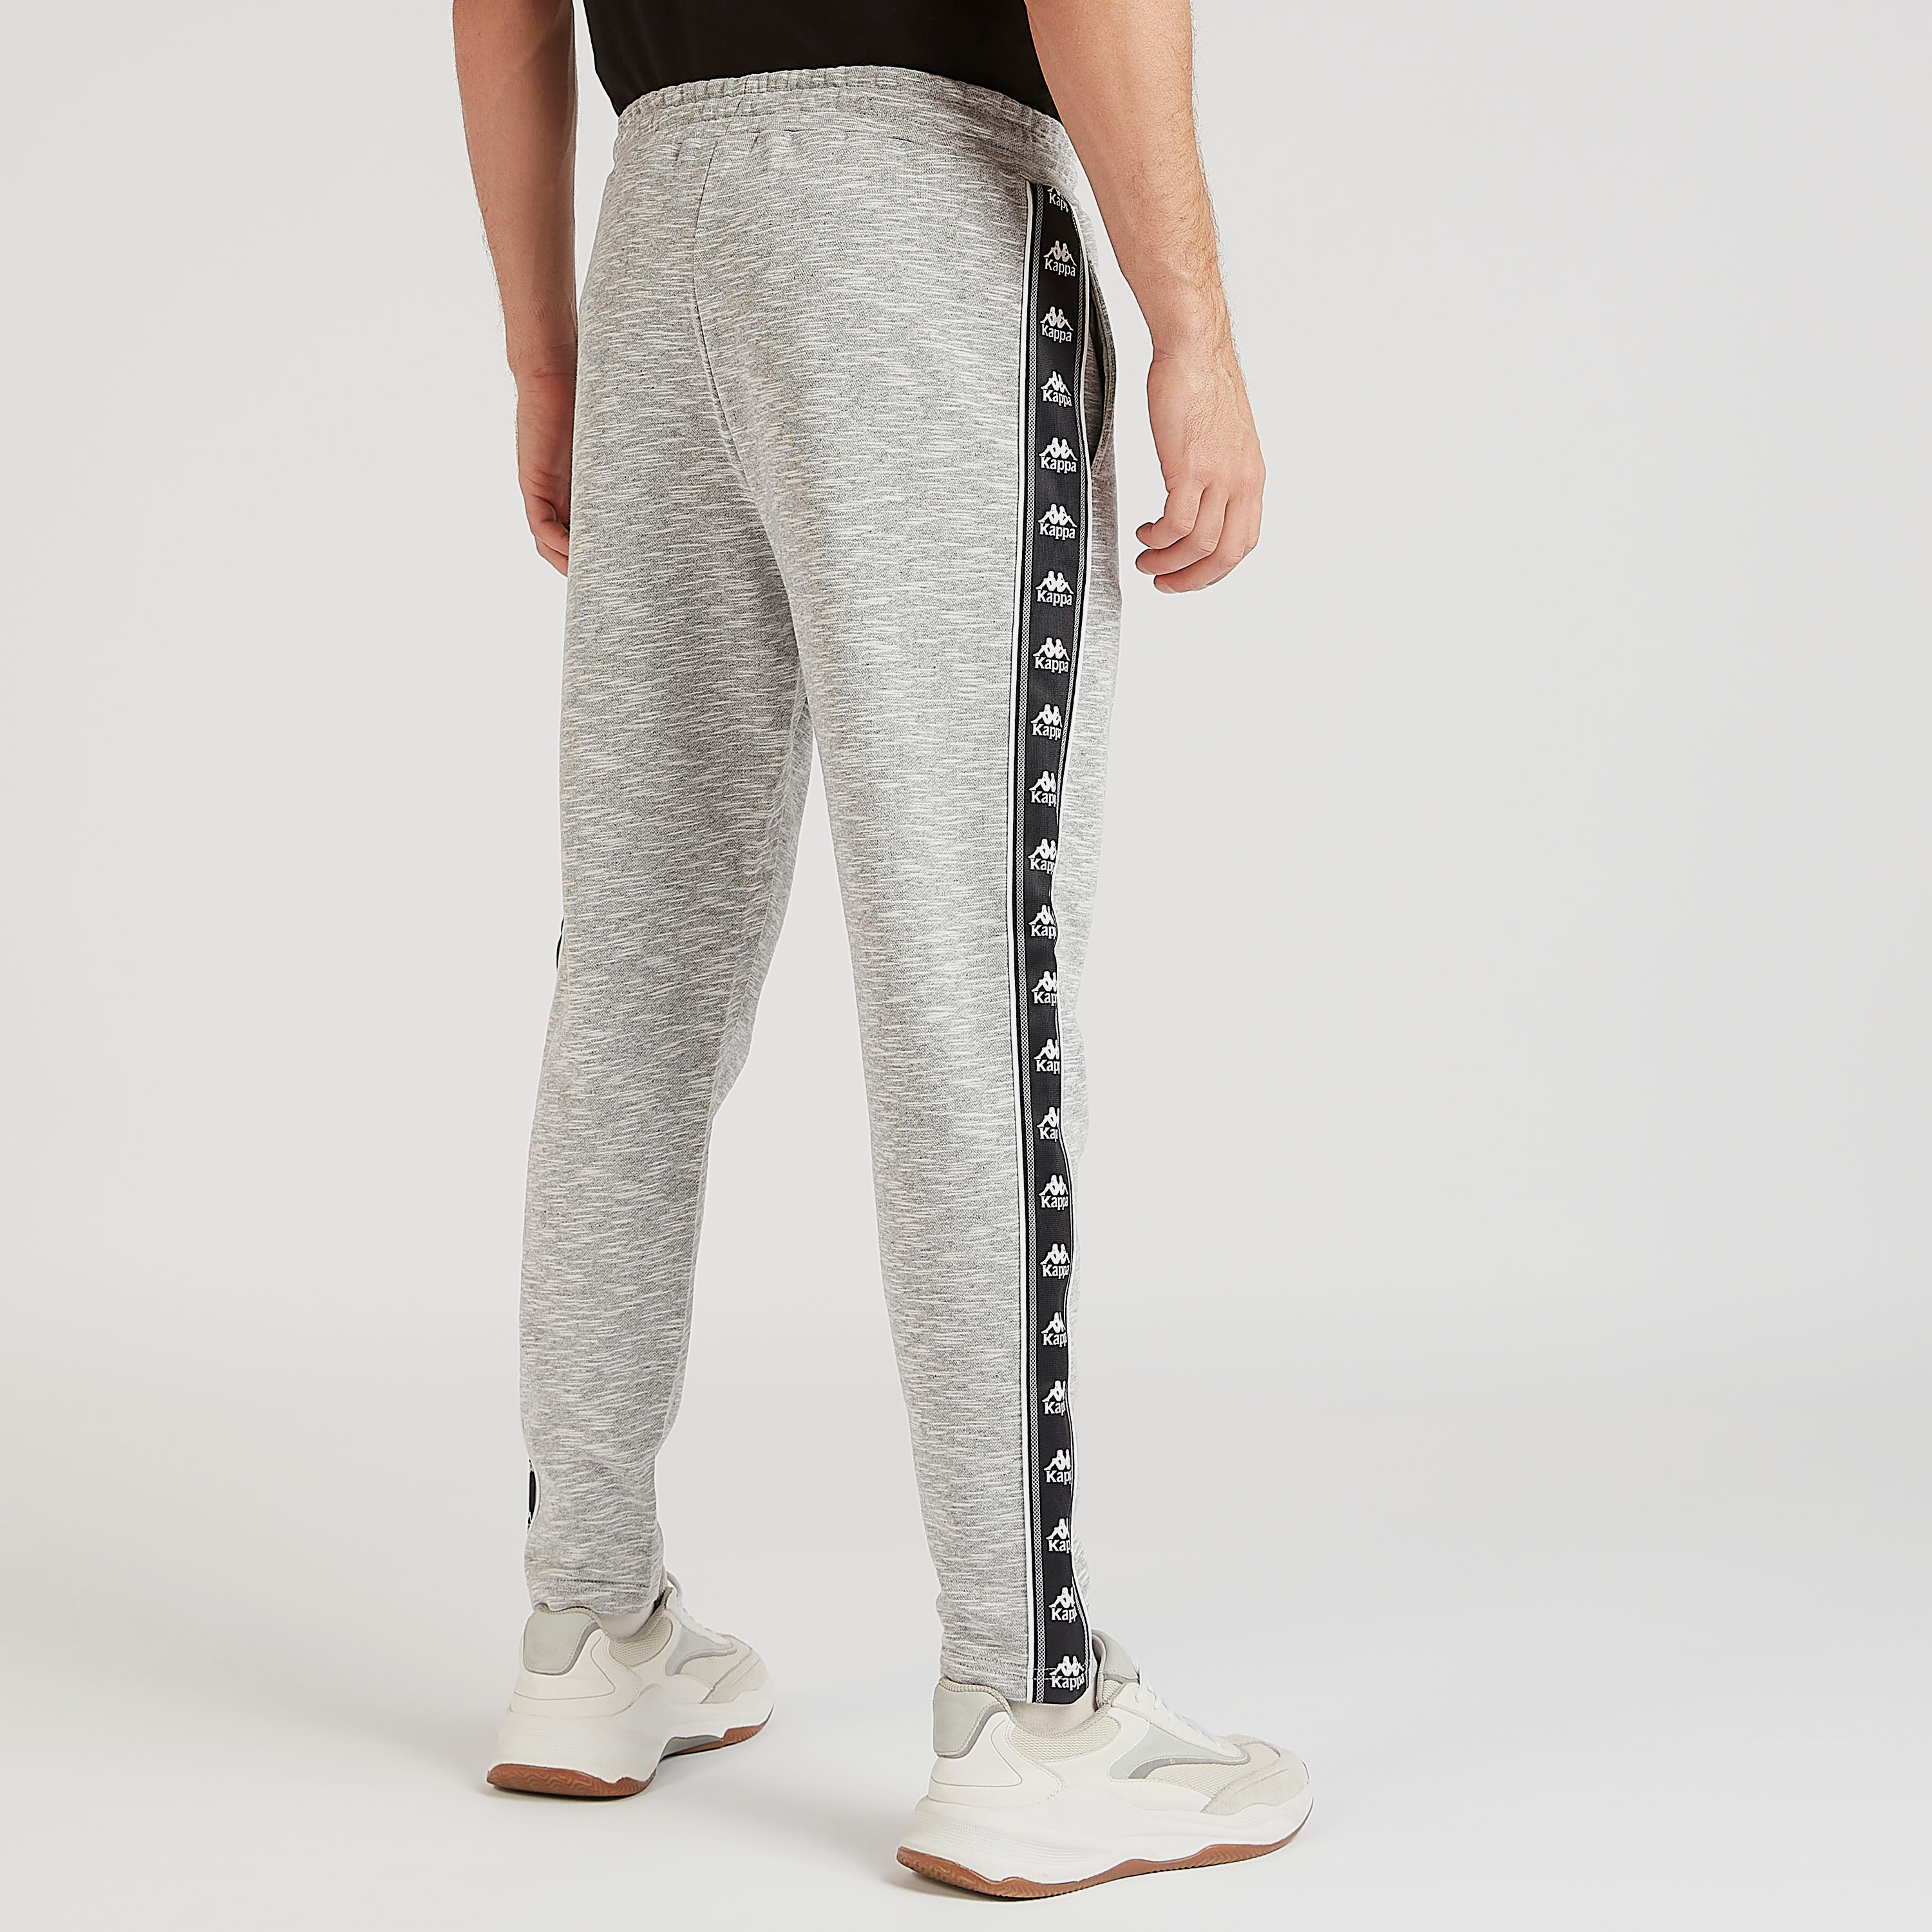 Buy Light Grey Track Pants for Men by KAPPA Online | Ajio.com